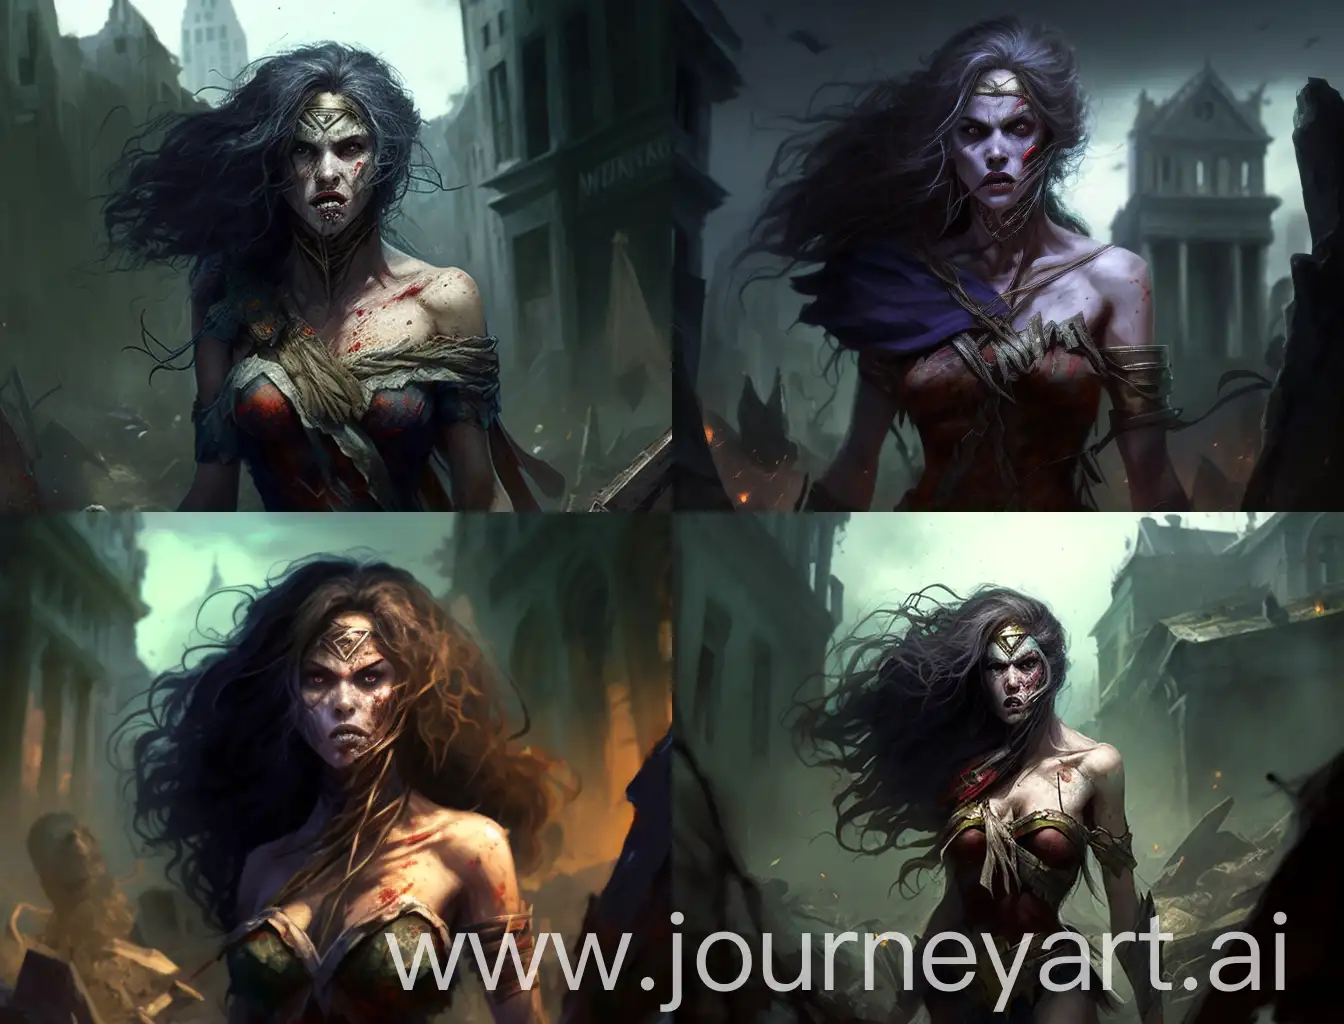 Zombie-Wonder-Woman-Struggling-in-Desolate-Cityscape